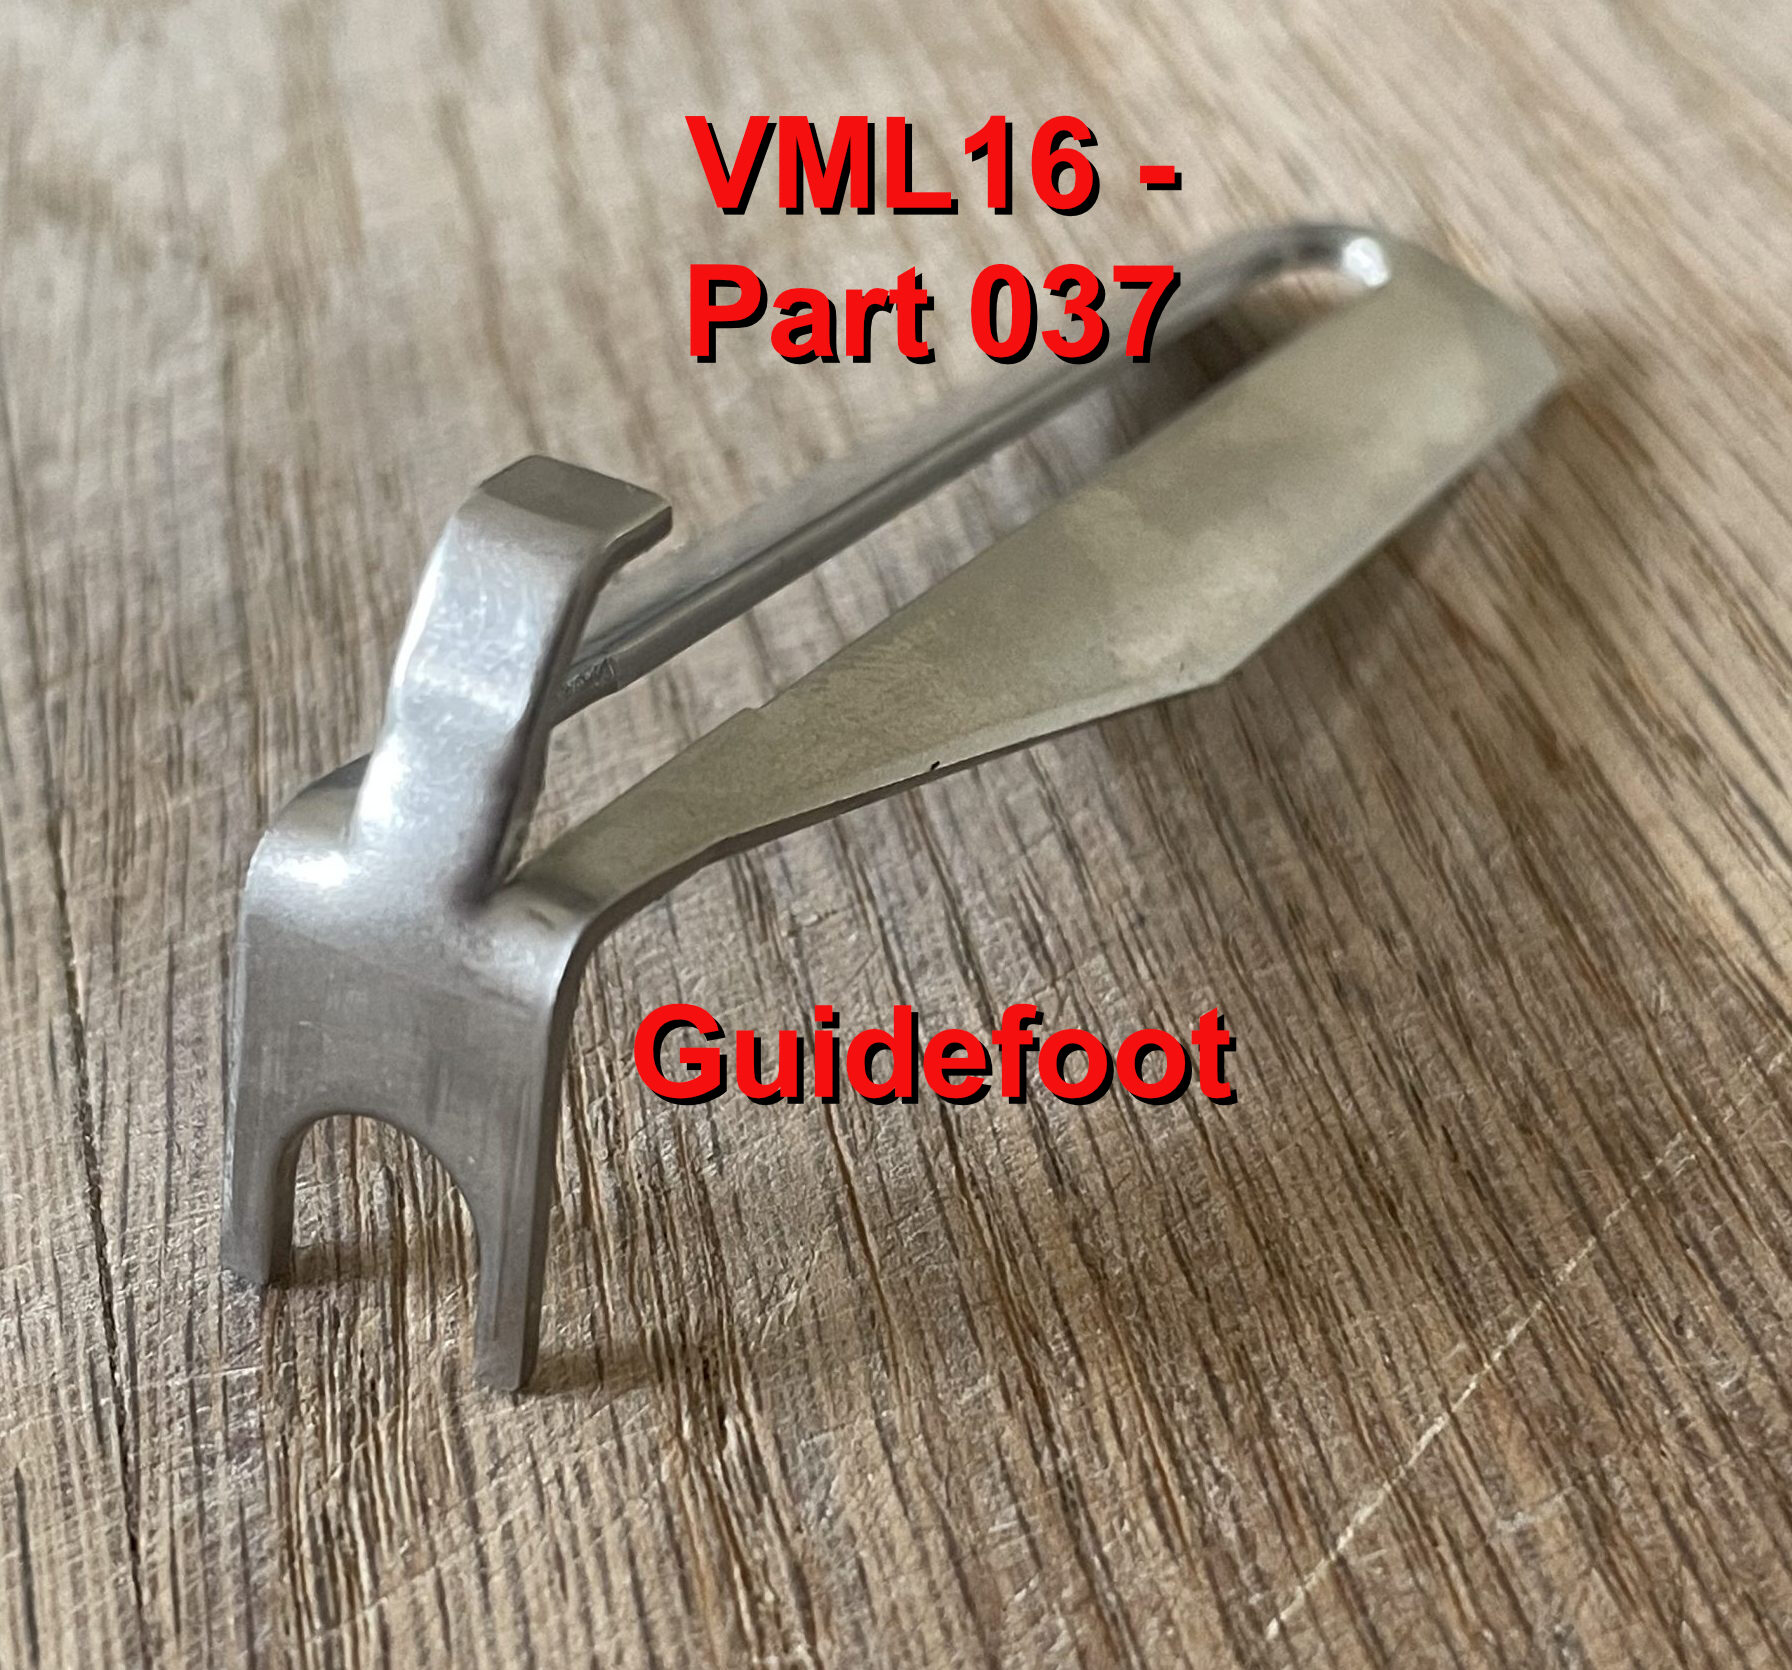 VML16-037-Guidefoot